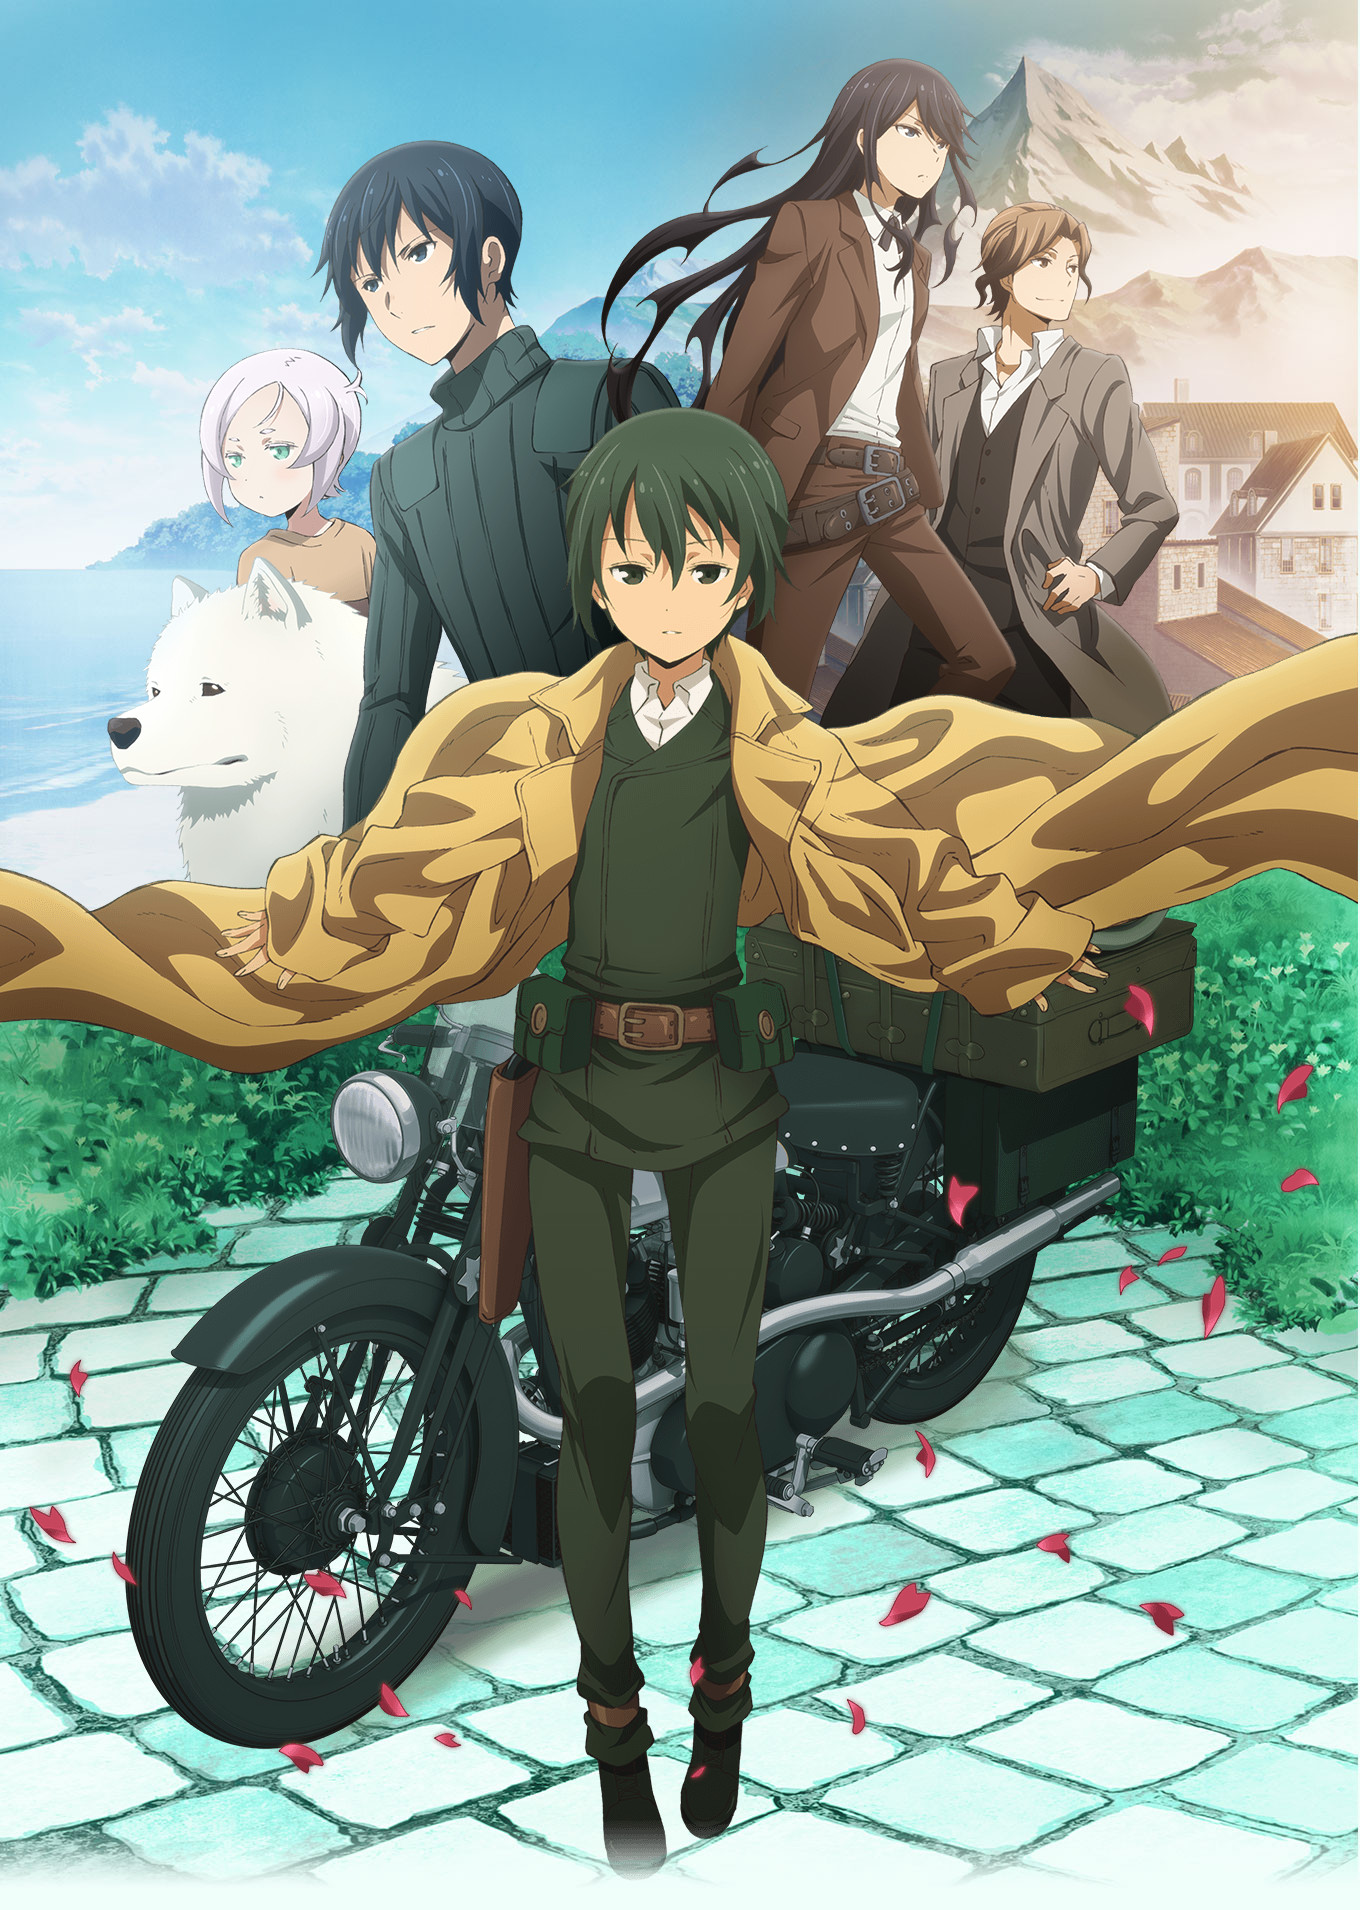 kino's journey anime series